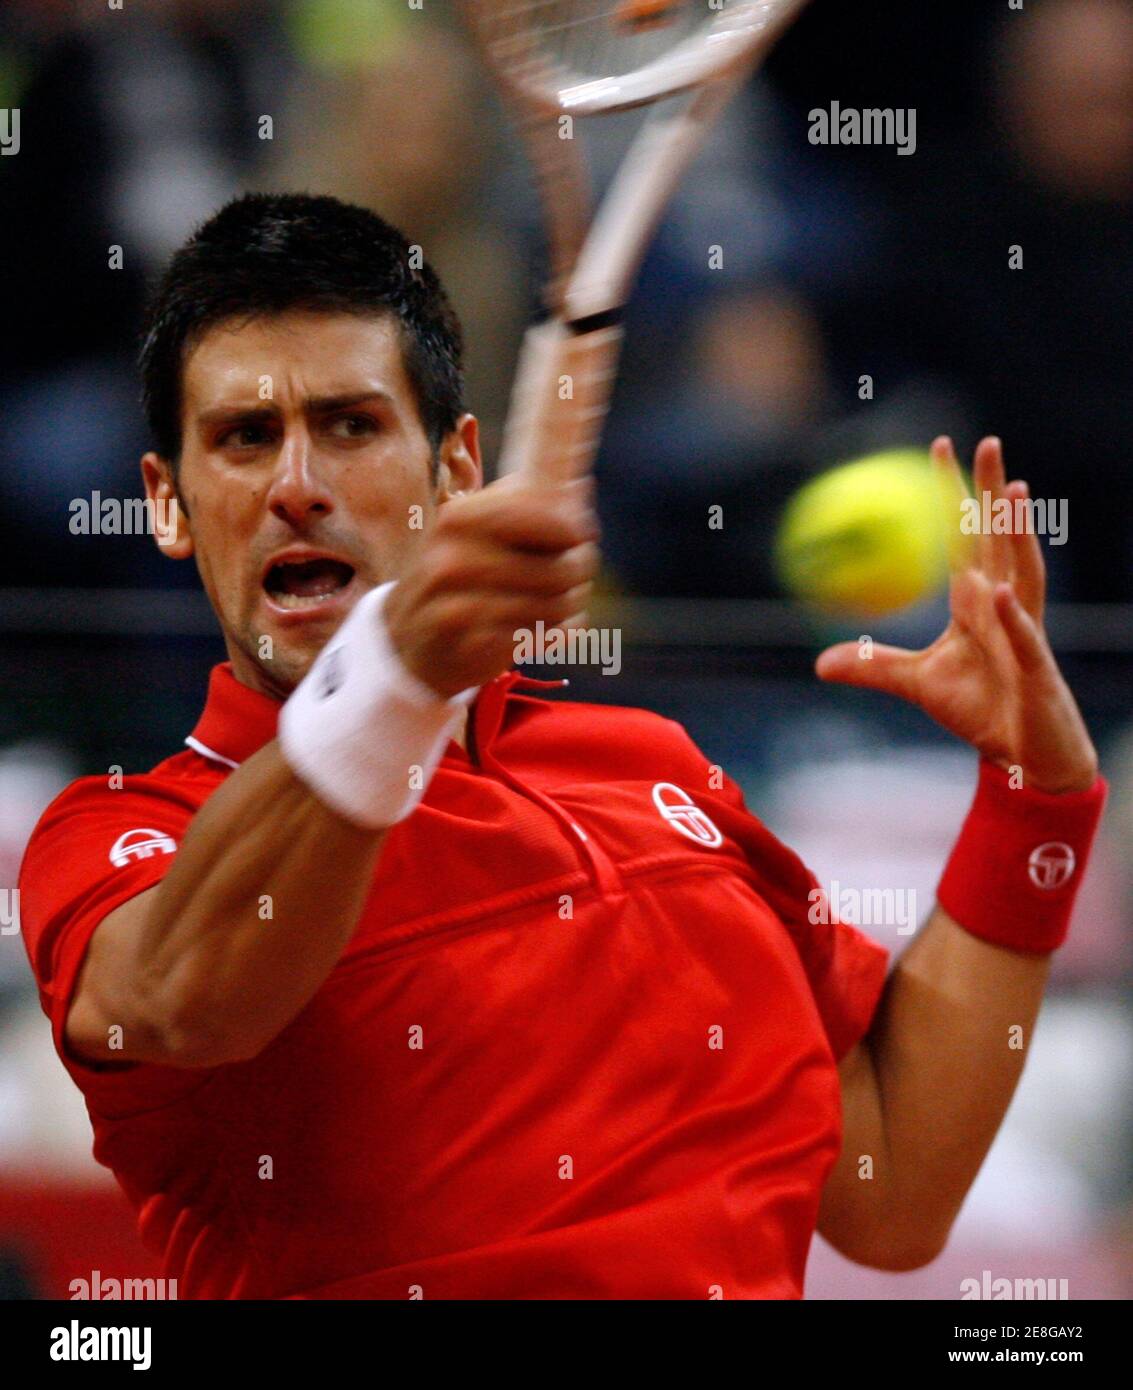 Serbia's Novak Djokovic hits a return against Sam Querrey of the U.S. during their Davis Cup World Group tennis match in Belgrade March 5, 2010.    REUTERS/Ivan Milutinovic (SERBIA - Tags: SPORT TENNIS) Stock Photo